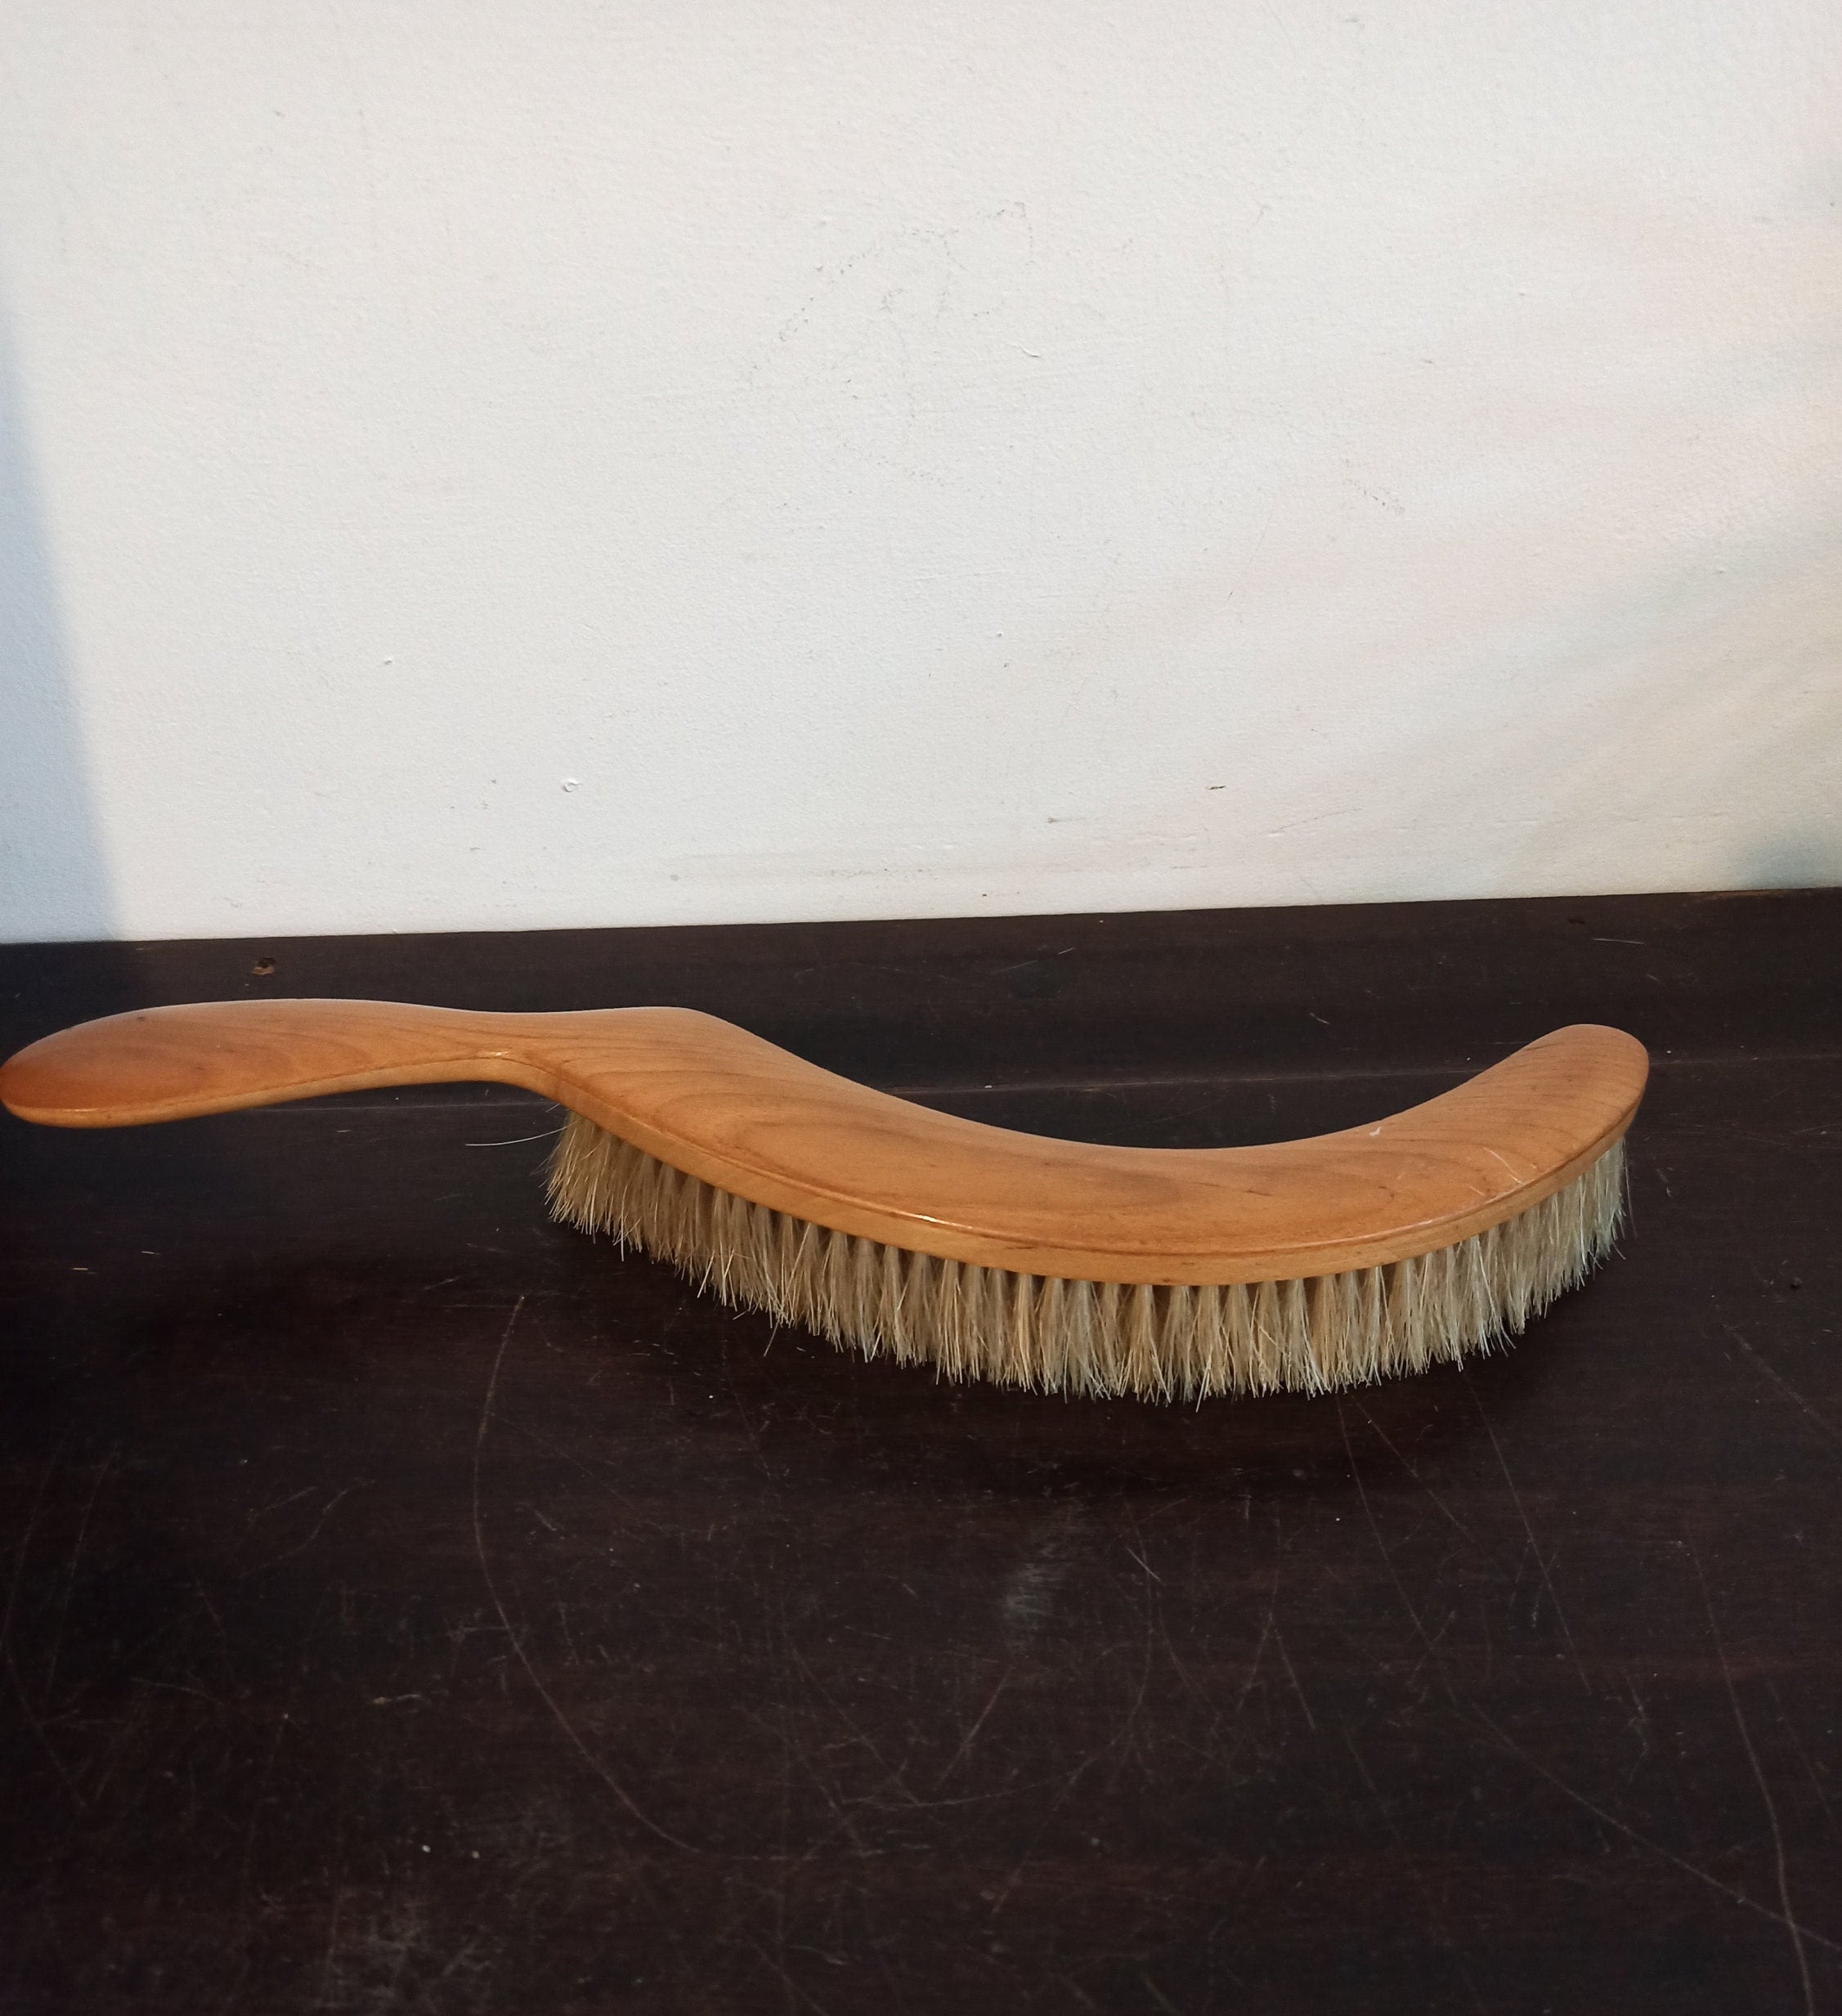 PERSONALISED Spick and Span Dandy Grooming Brush Horse Brush Gift